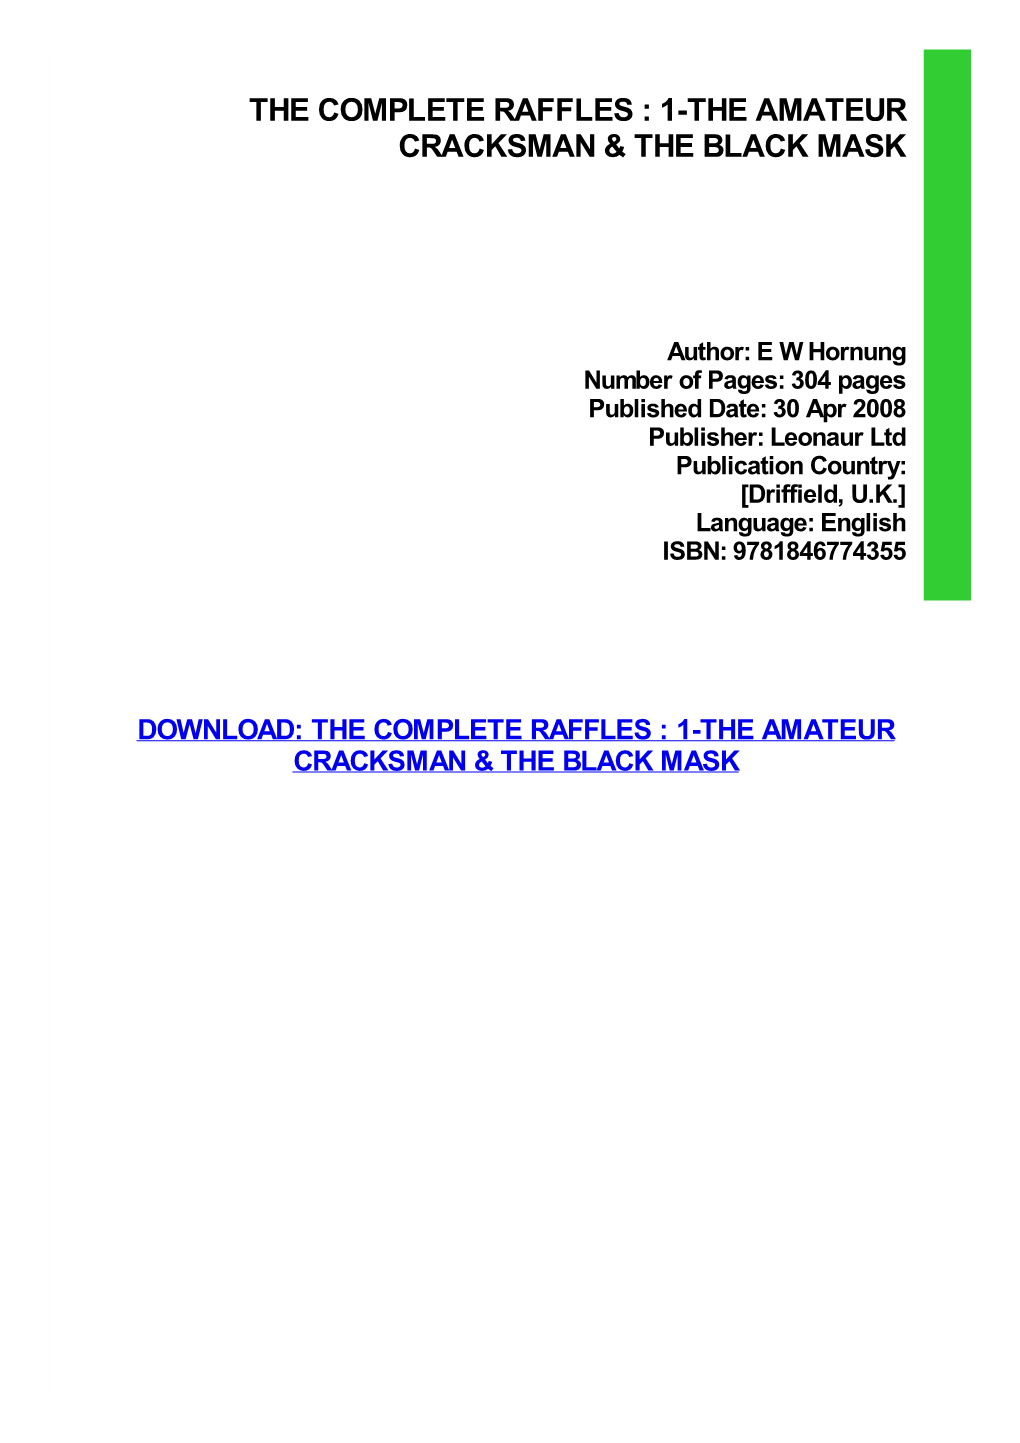 The Complete Raffles : 1-The Amateur Cracksman & the Black Mask